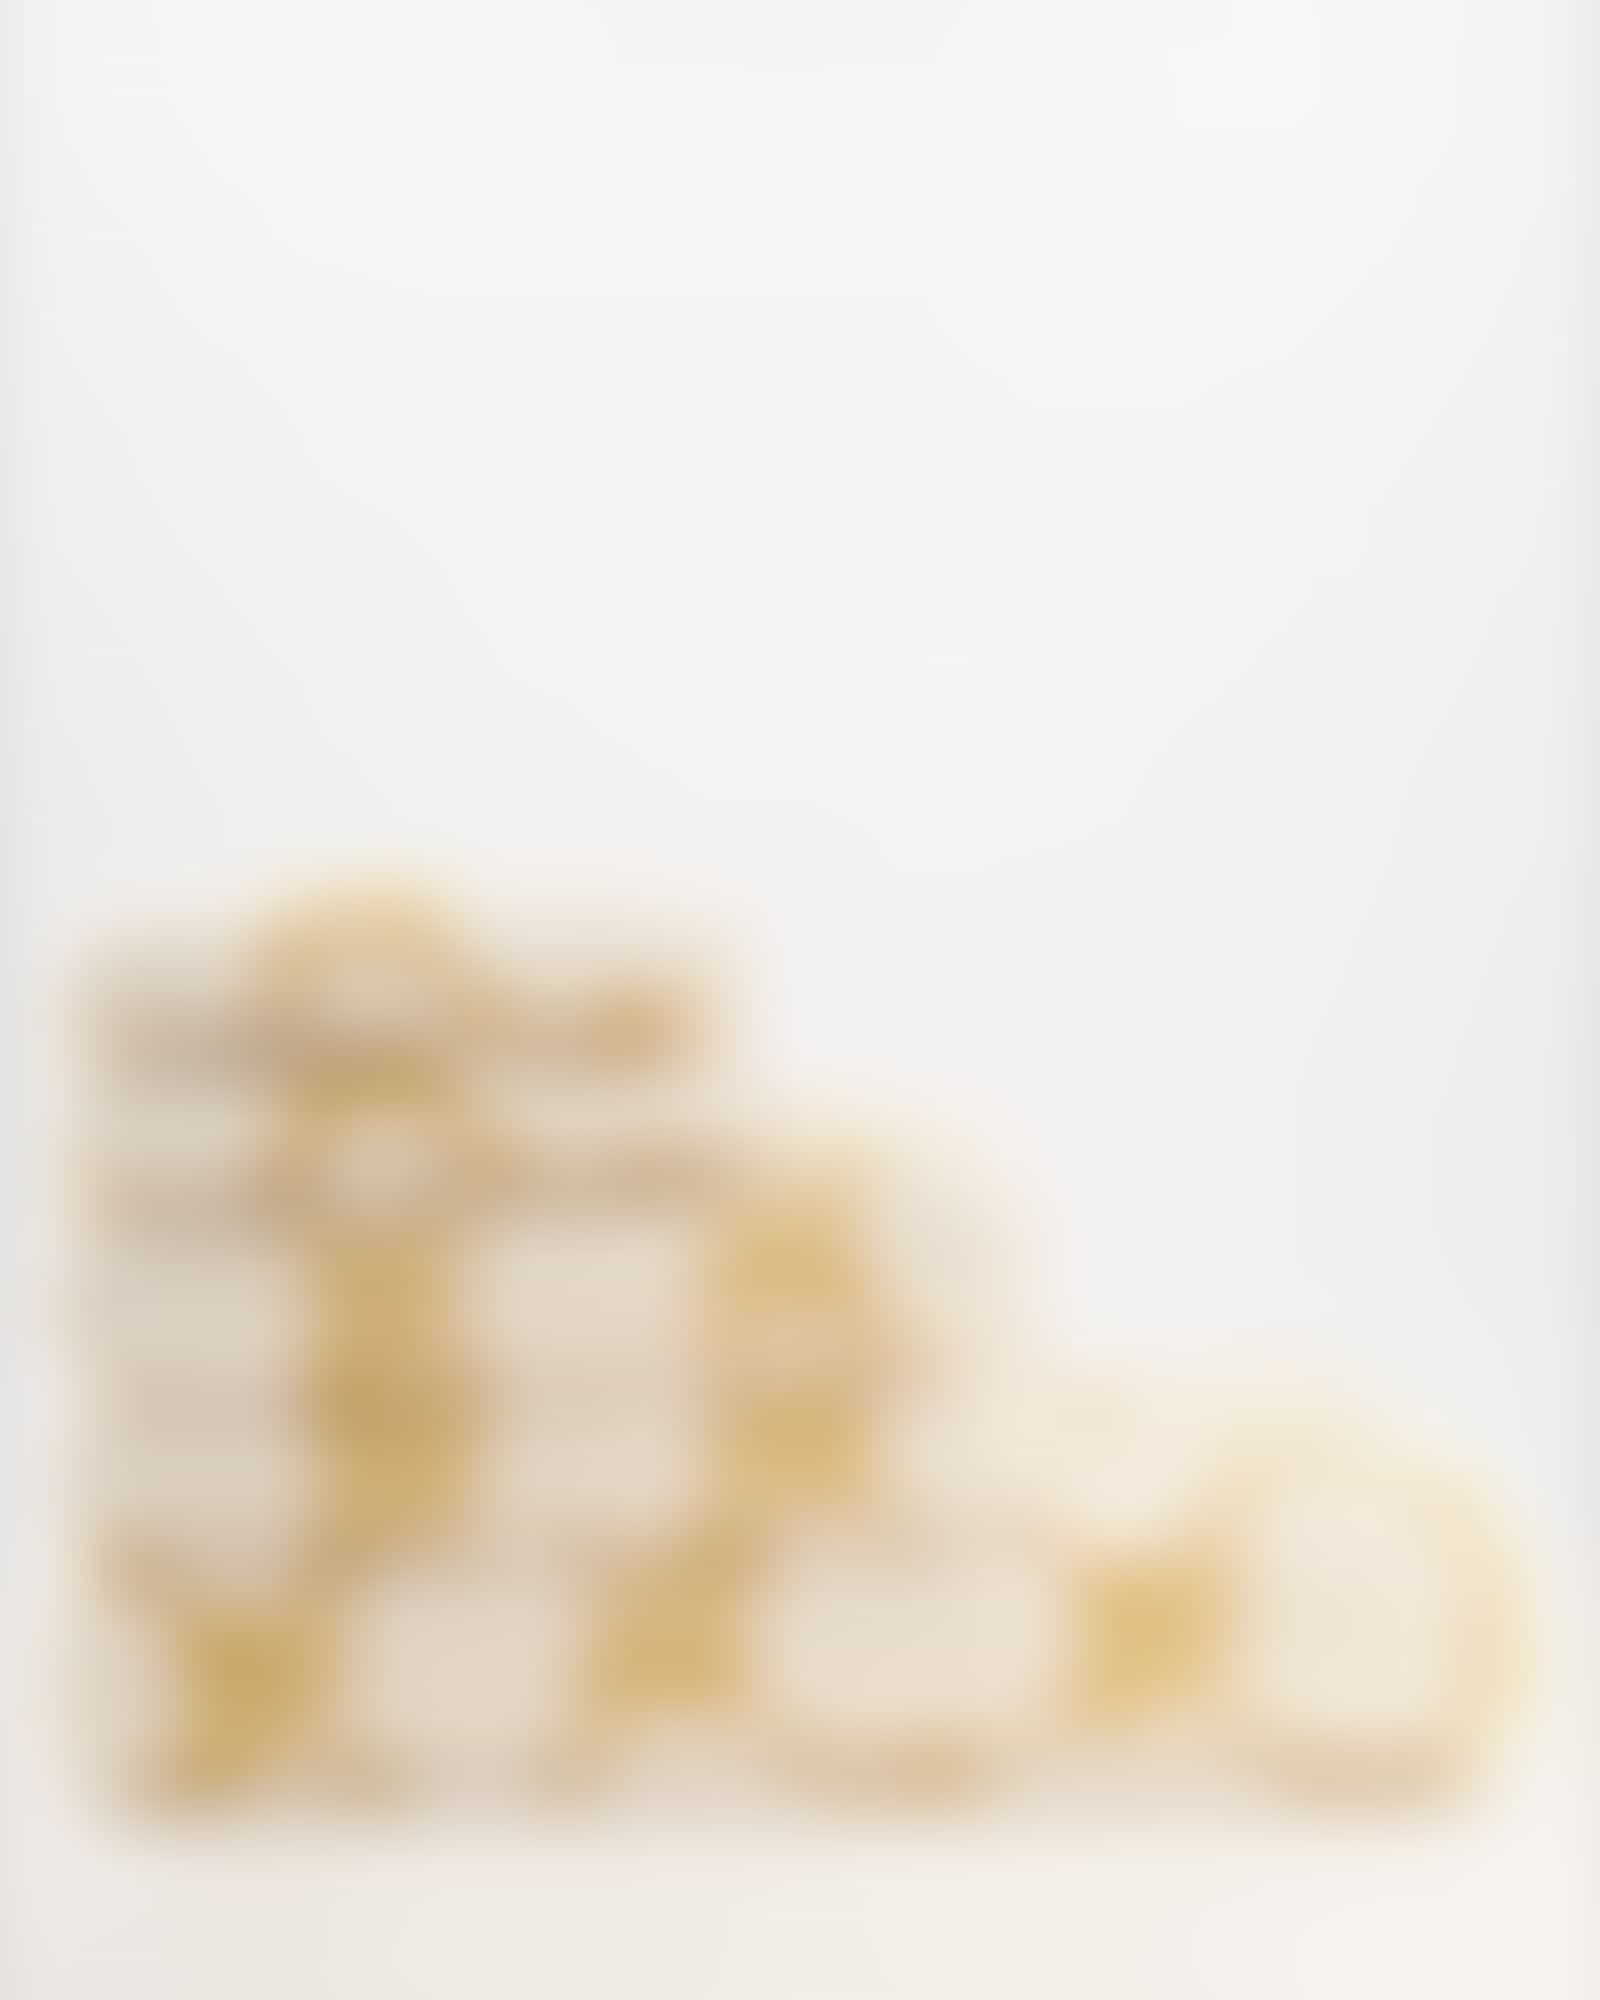 JOOP! Classic - Cornflower 1611 - Farbe: Amber - 35 - Waschhandschuh 16x22 cm Detailbild 3